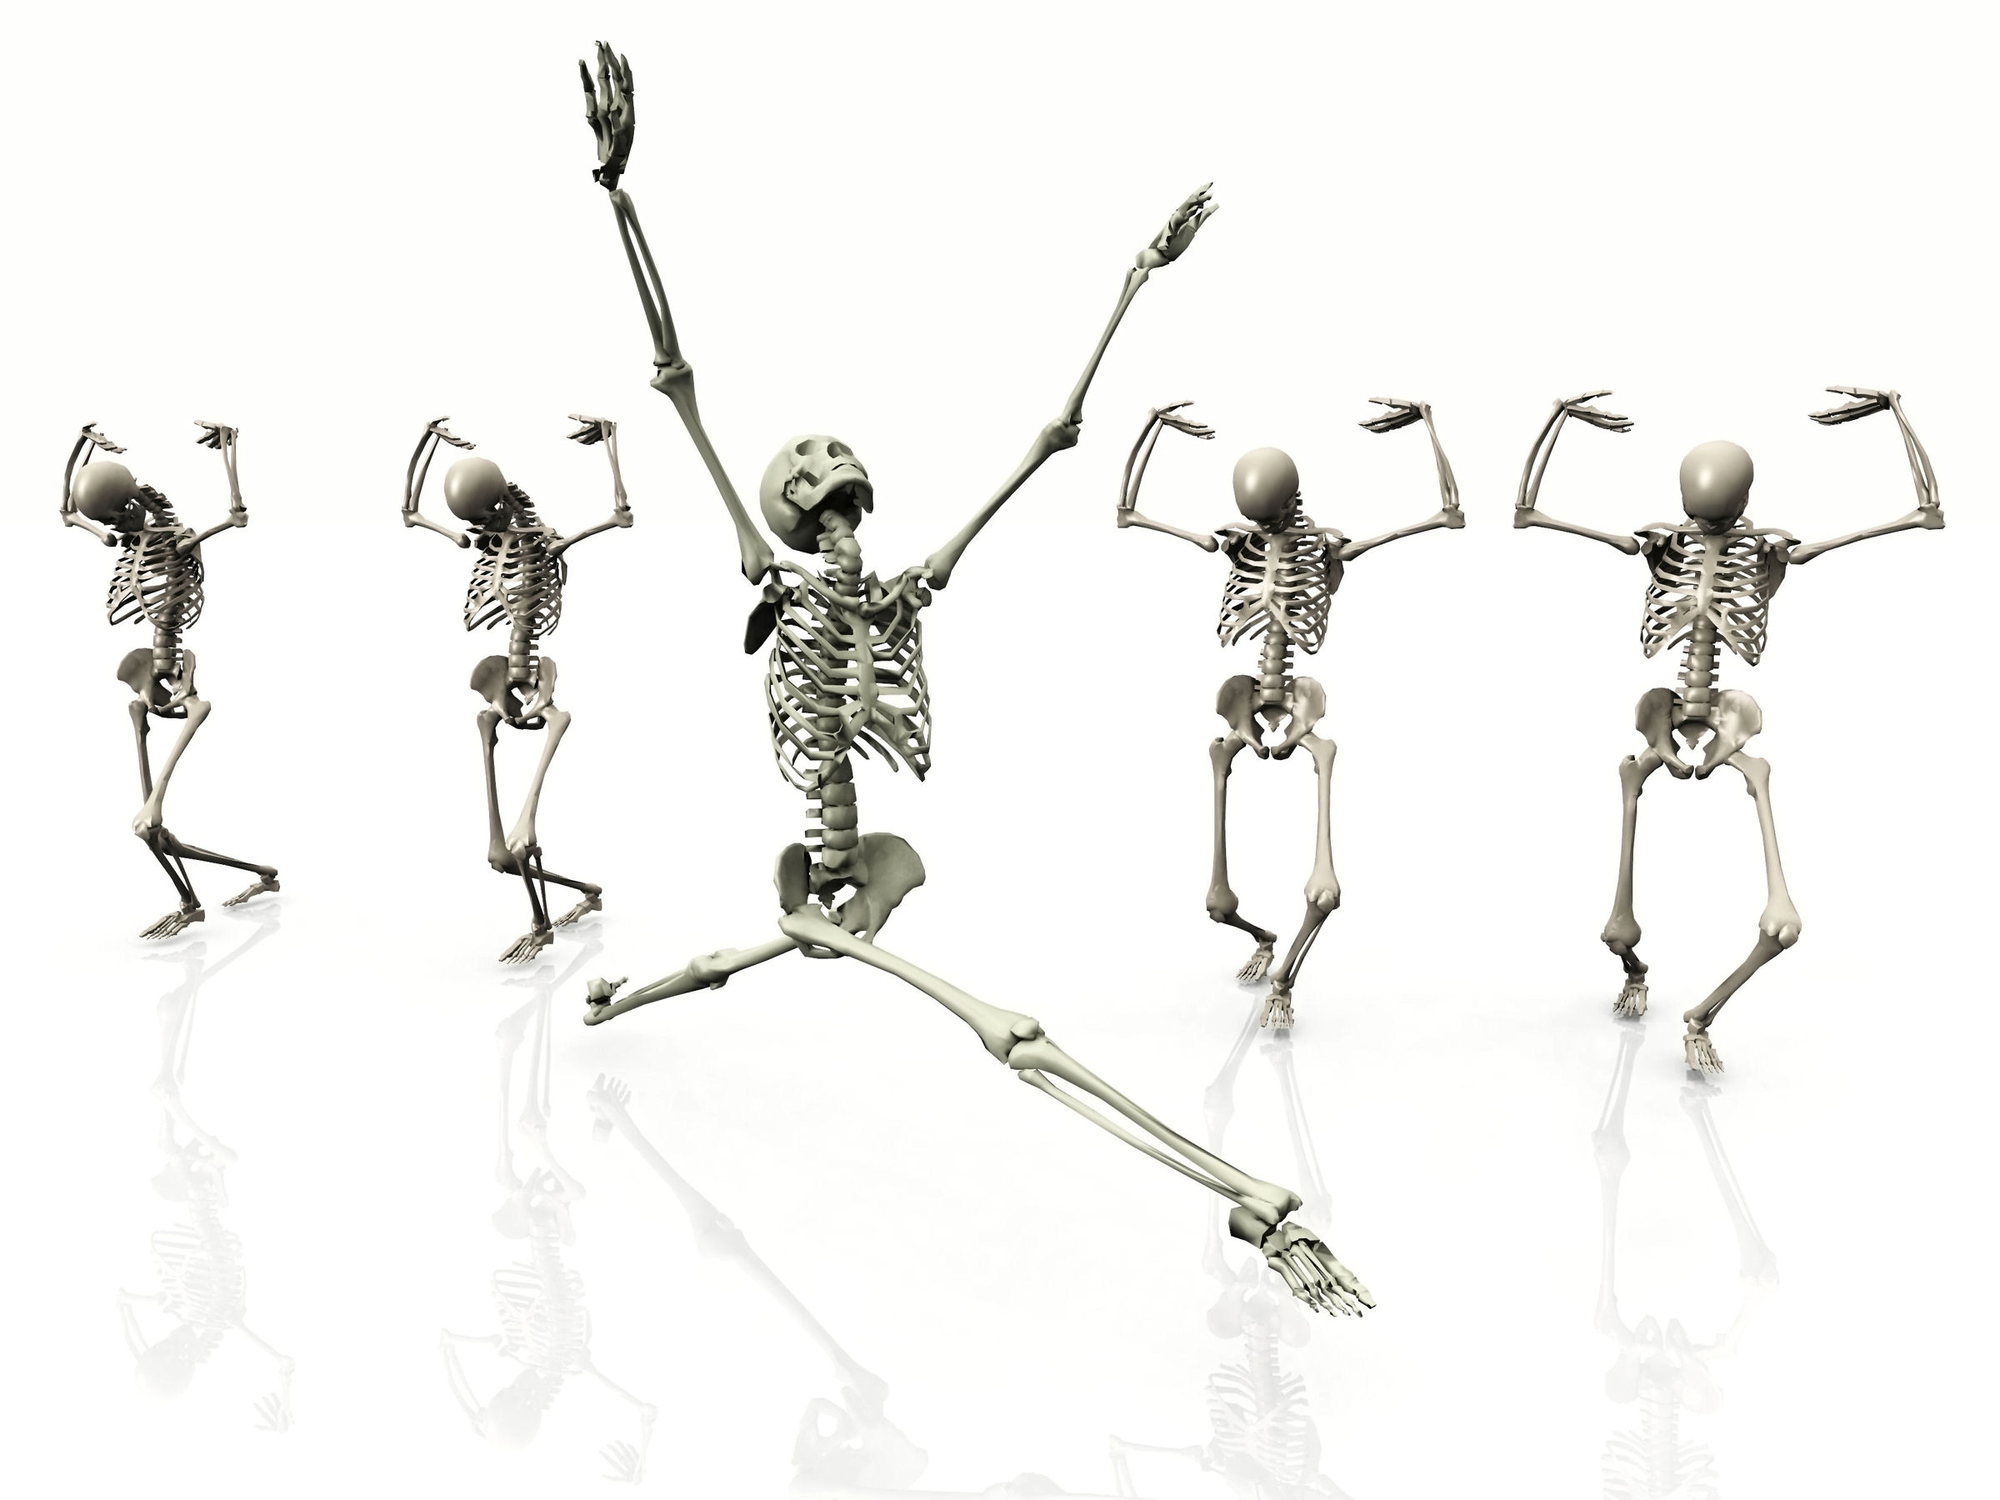 Five dancing skeletons